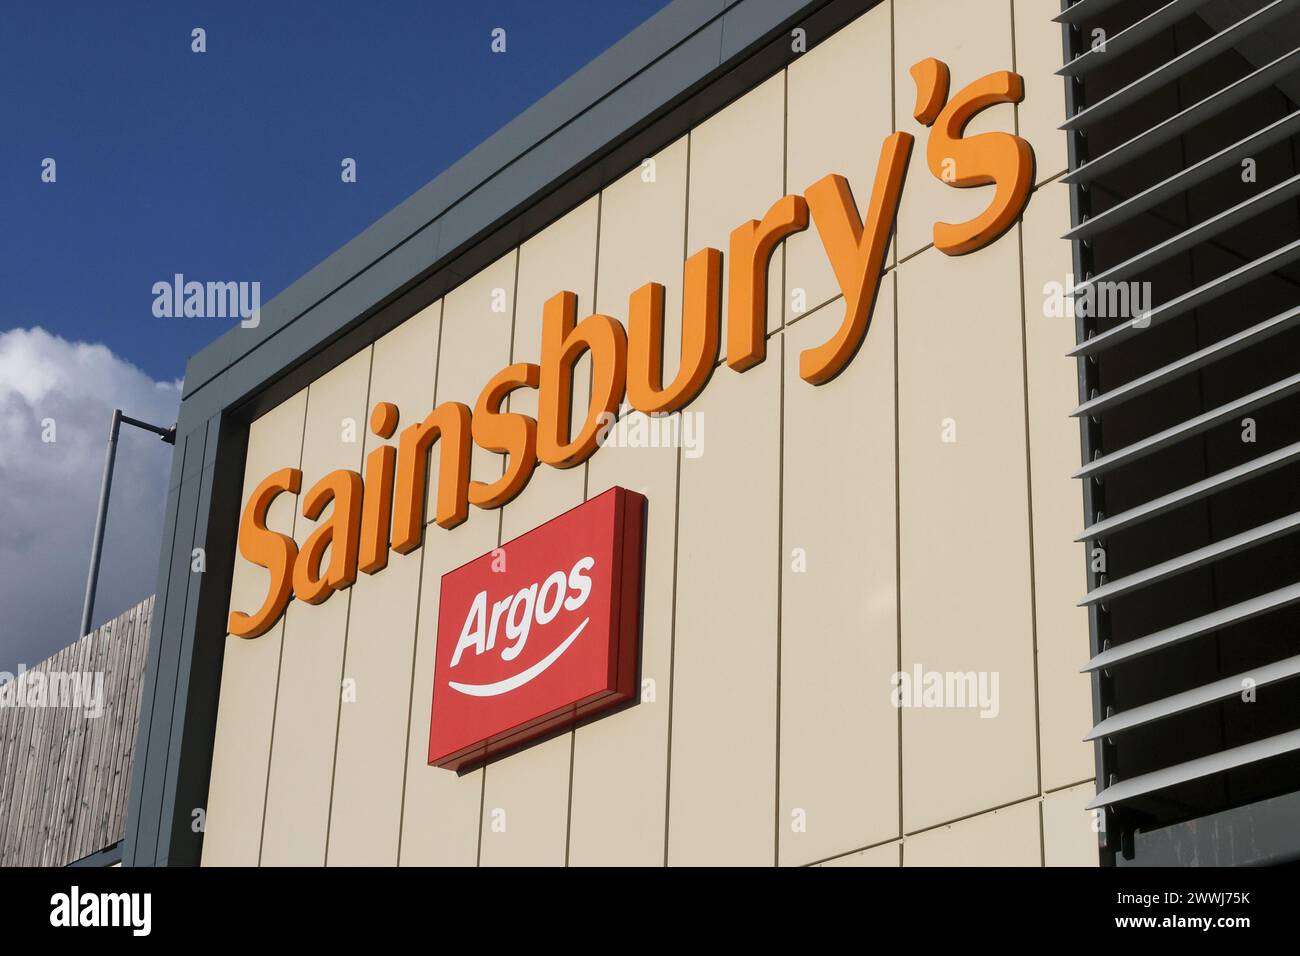 Sainsbury's Argos superstore in Sutton, England, UK Stock Photo